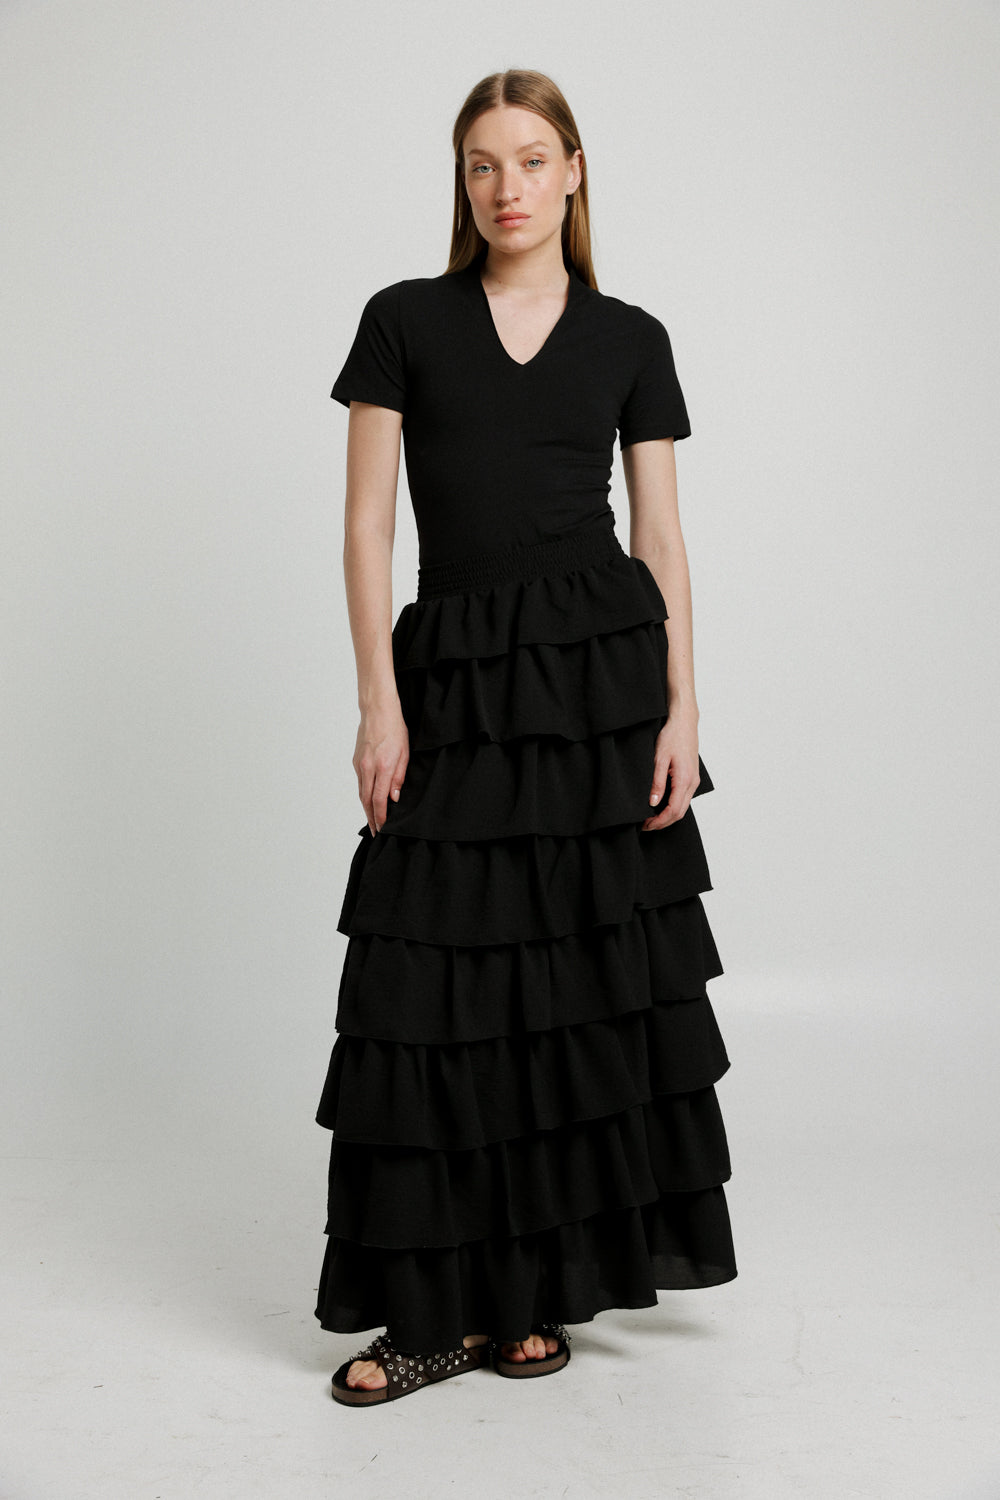 Peplum Black Skirt